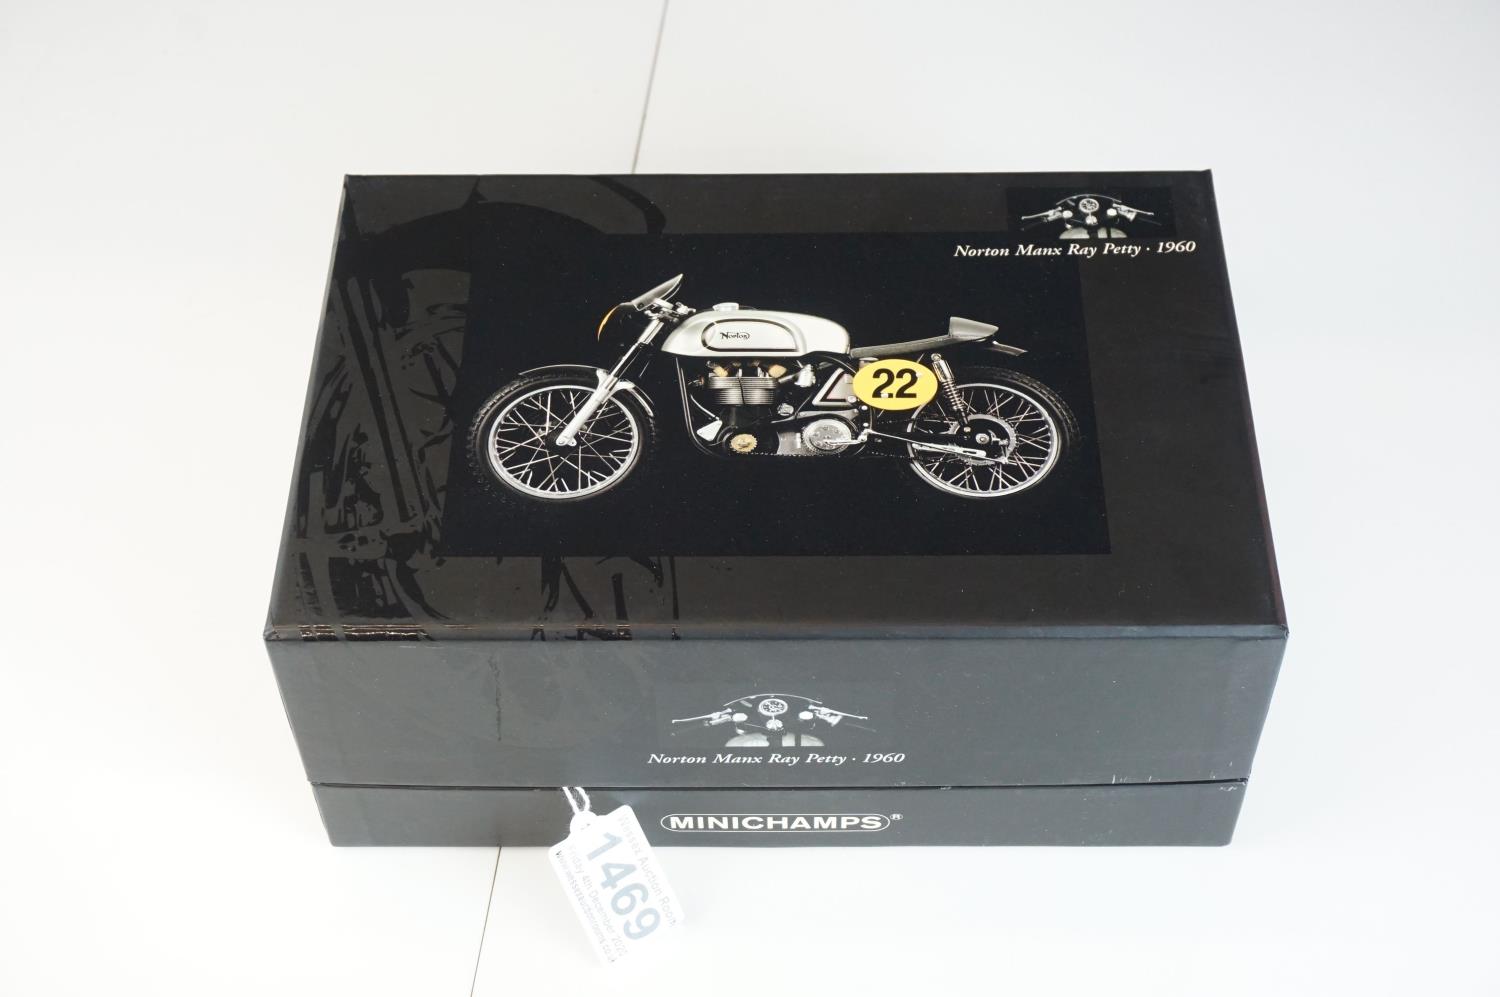 Boxed 1/12 Paul's Model Art Minichamps Classic Bike Series Norton Manx Ray Petty diecast model in - Image 8 of 8